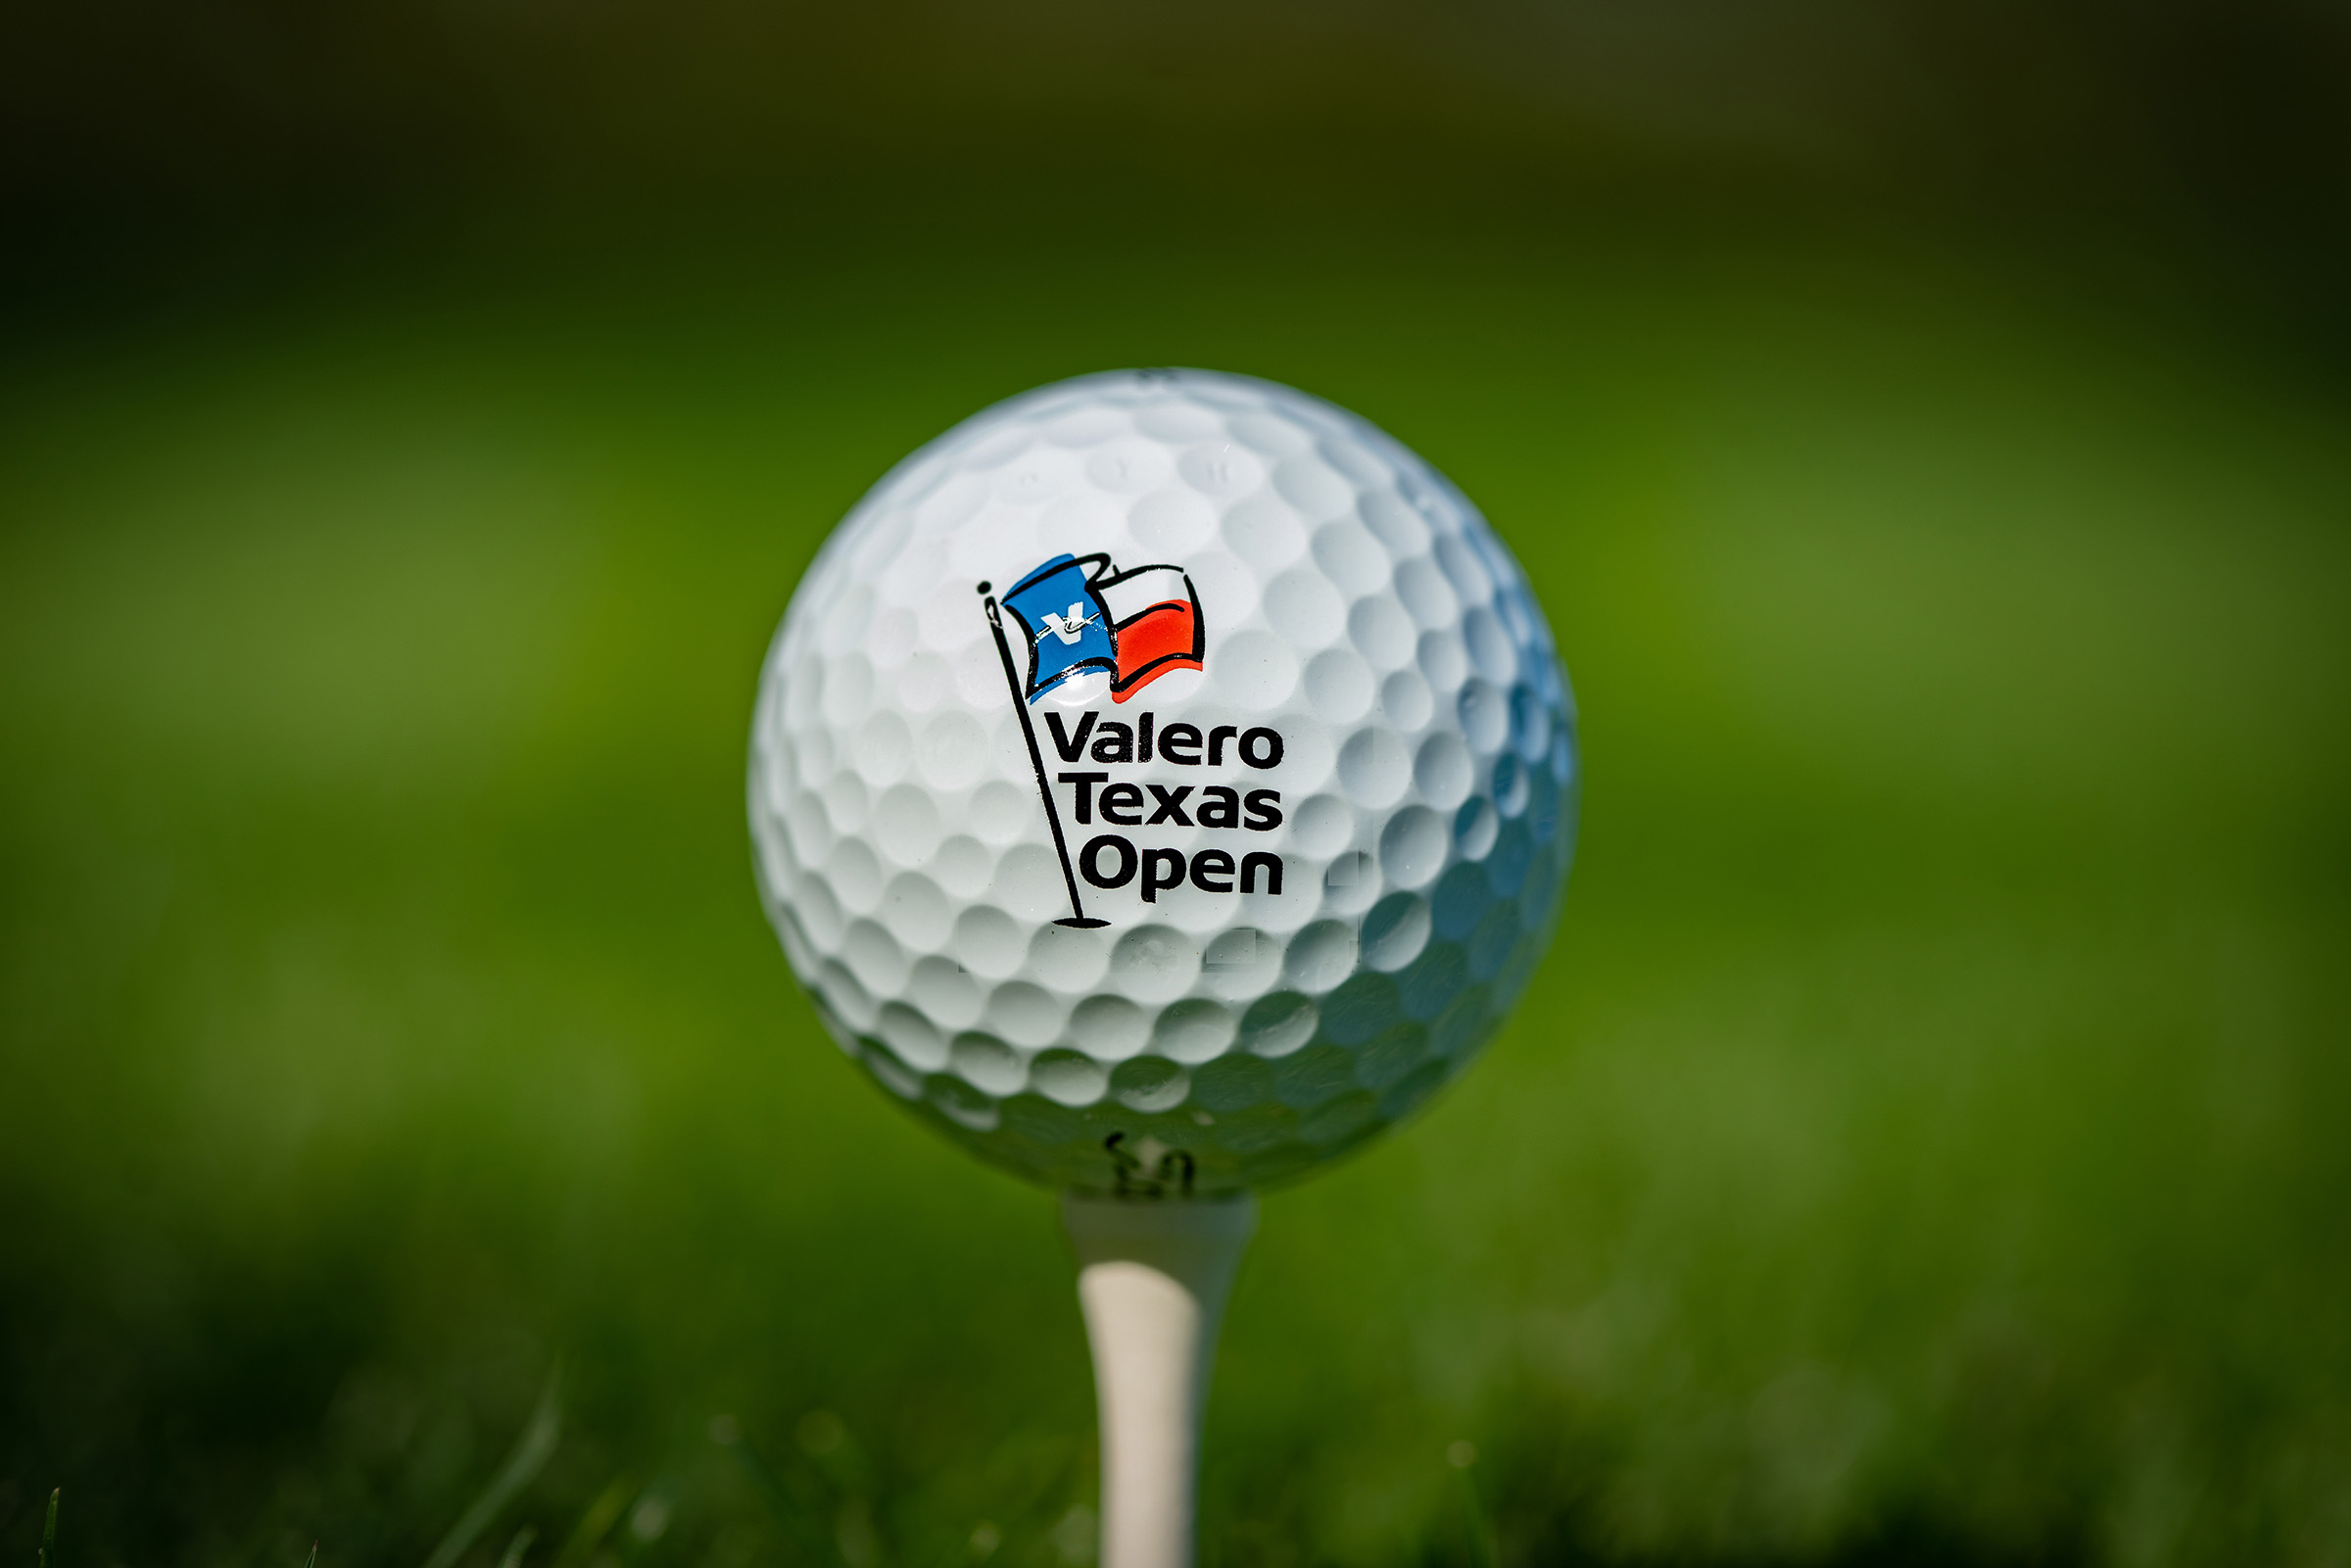 Valero Texas Open Golf Ball